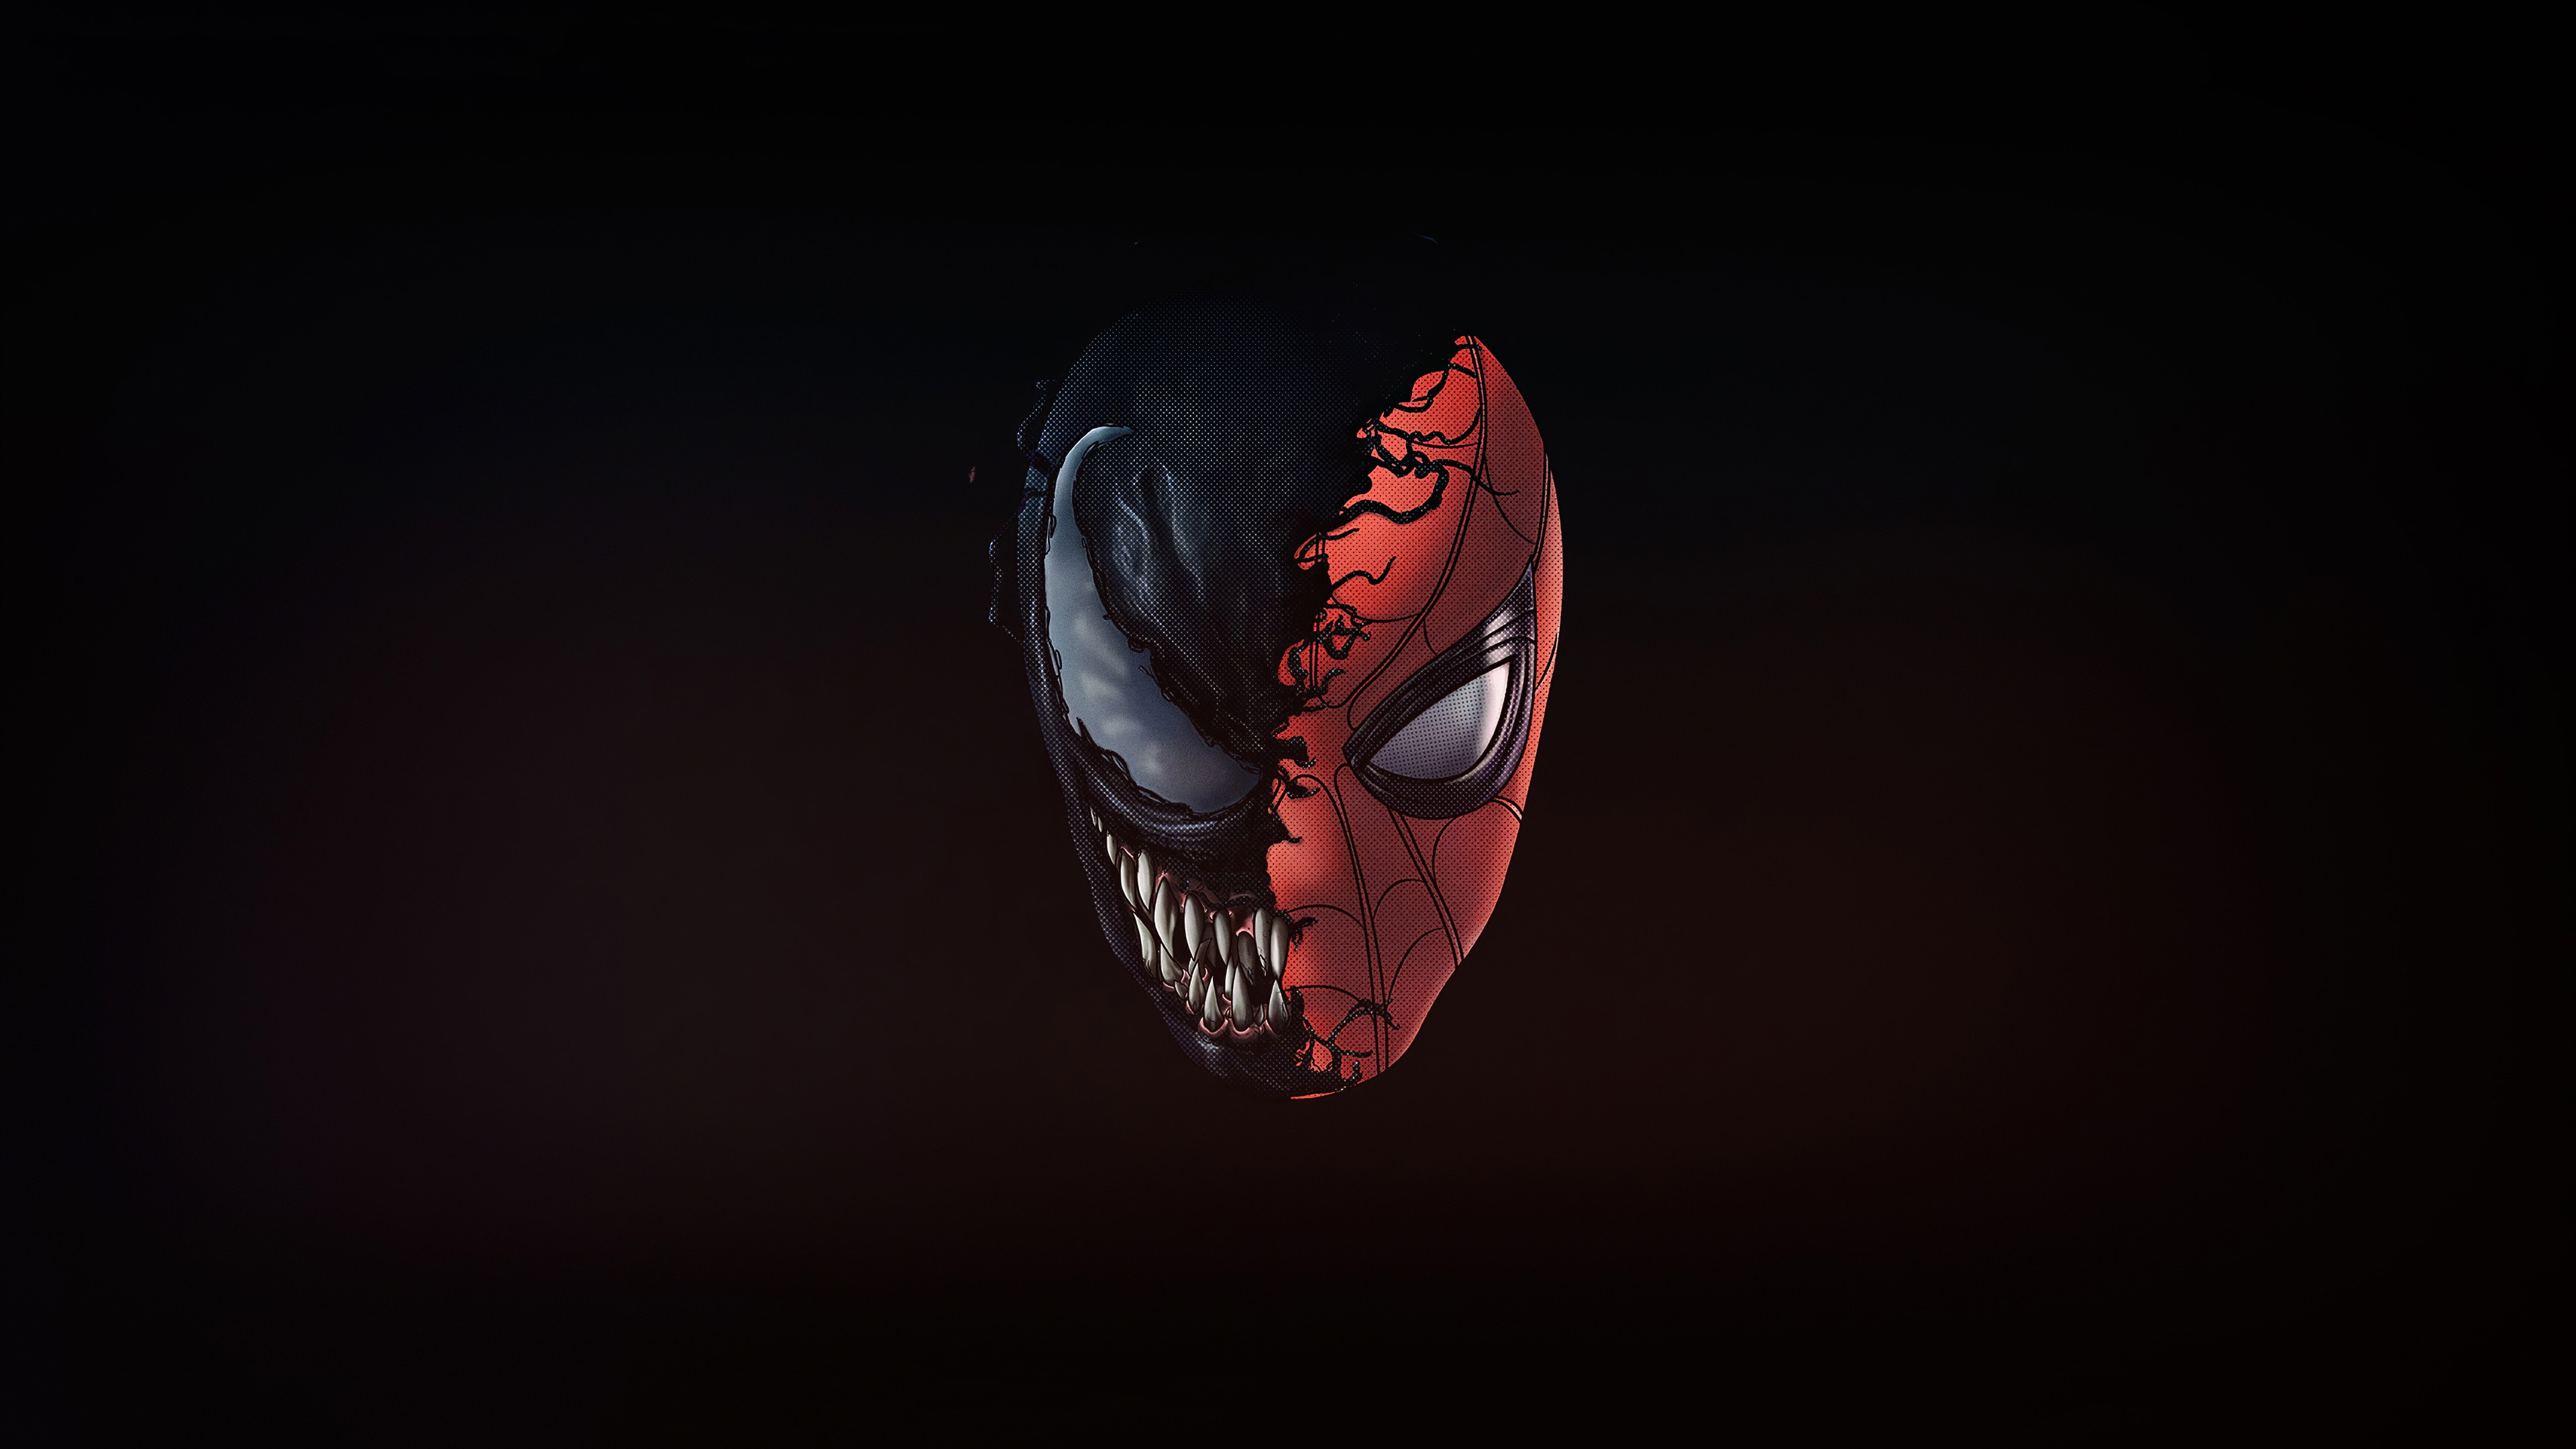  Venom  x Spiderman  4K  Wallpaper  HD Superheroes 4K  